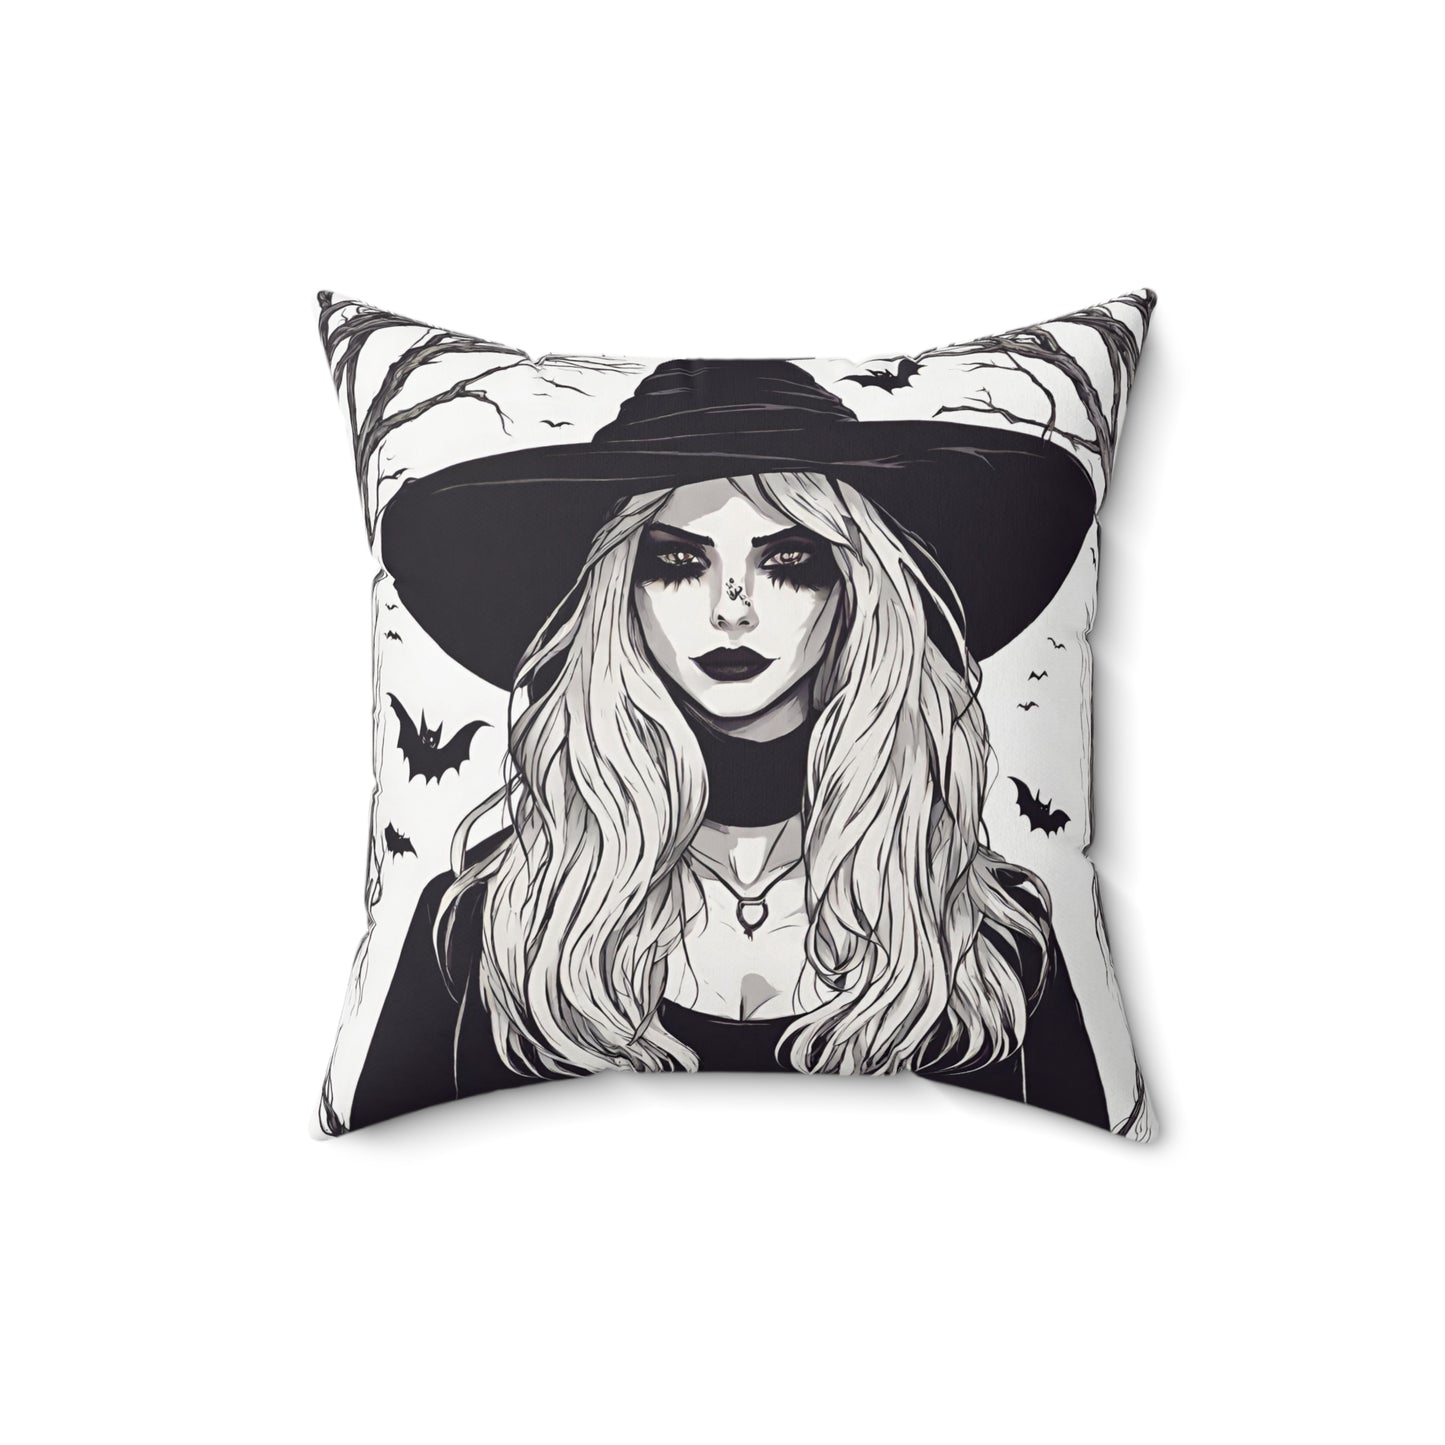 Witch Throw Pillow | Halloween Home Décor Home Decor Petrova Designs